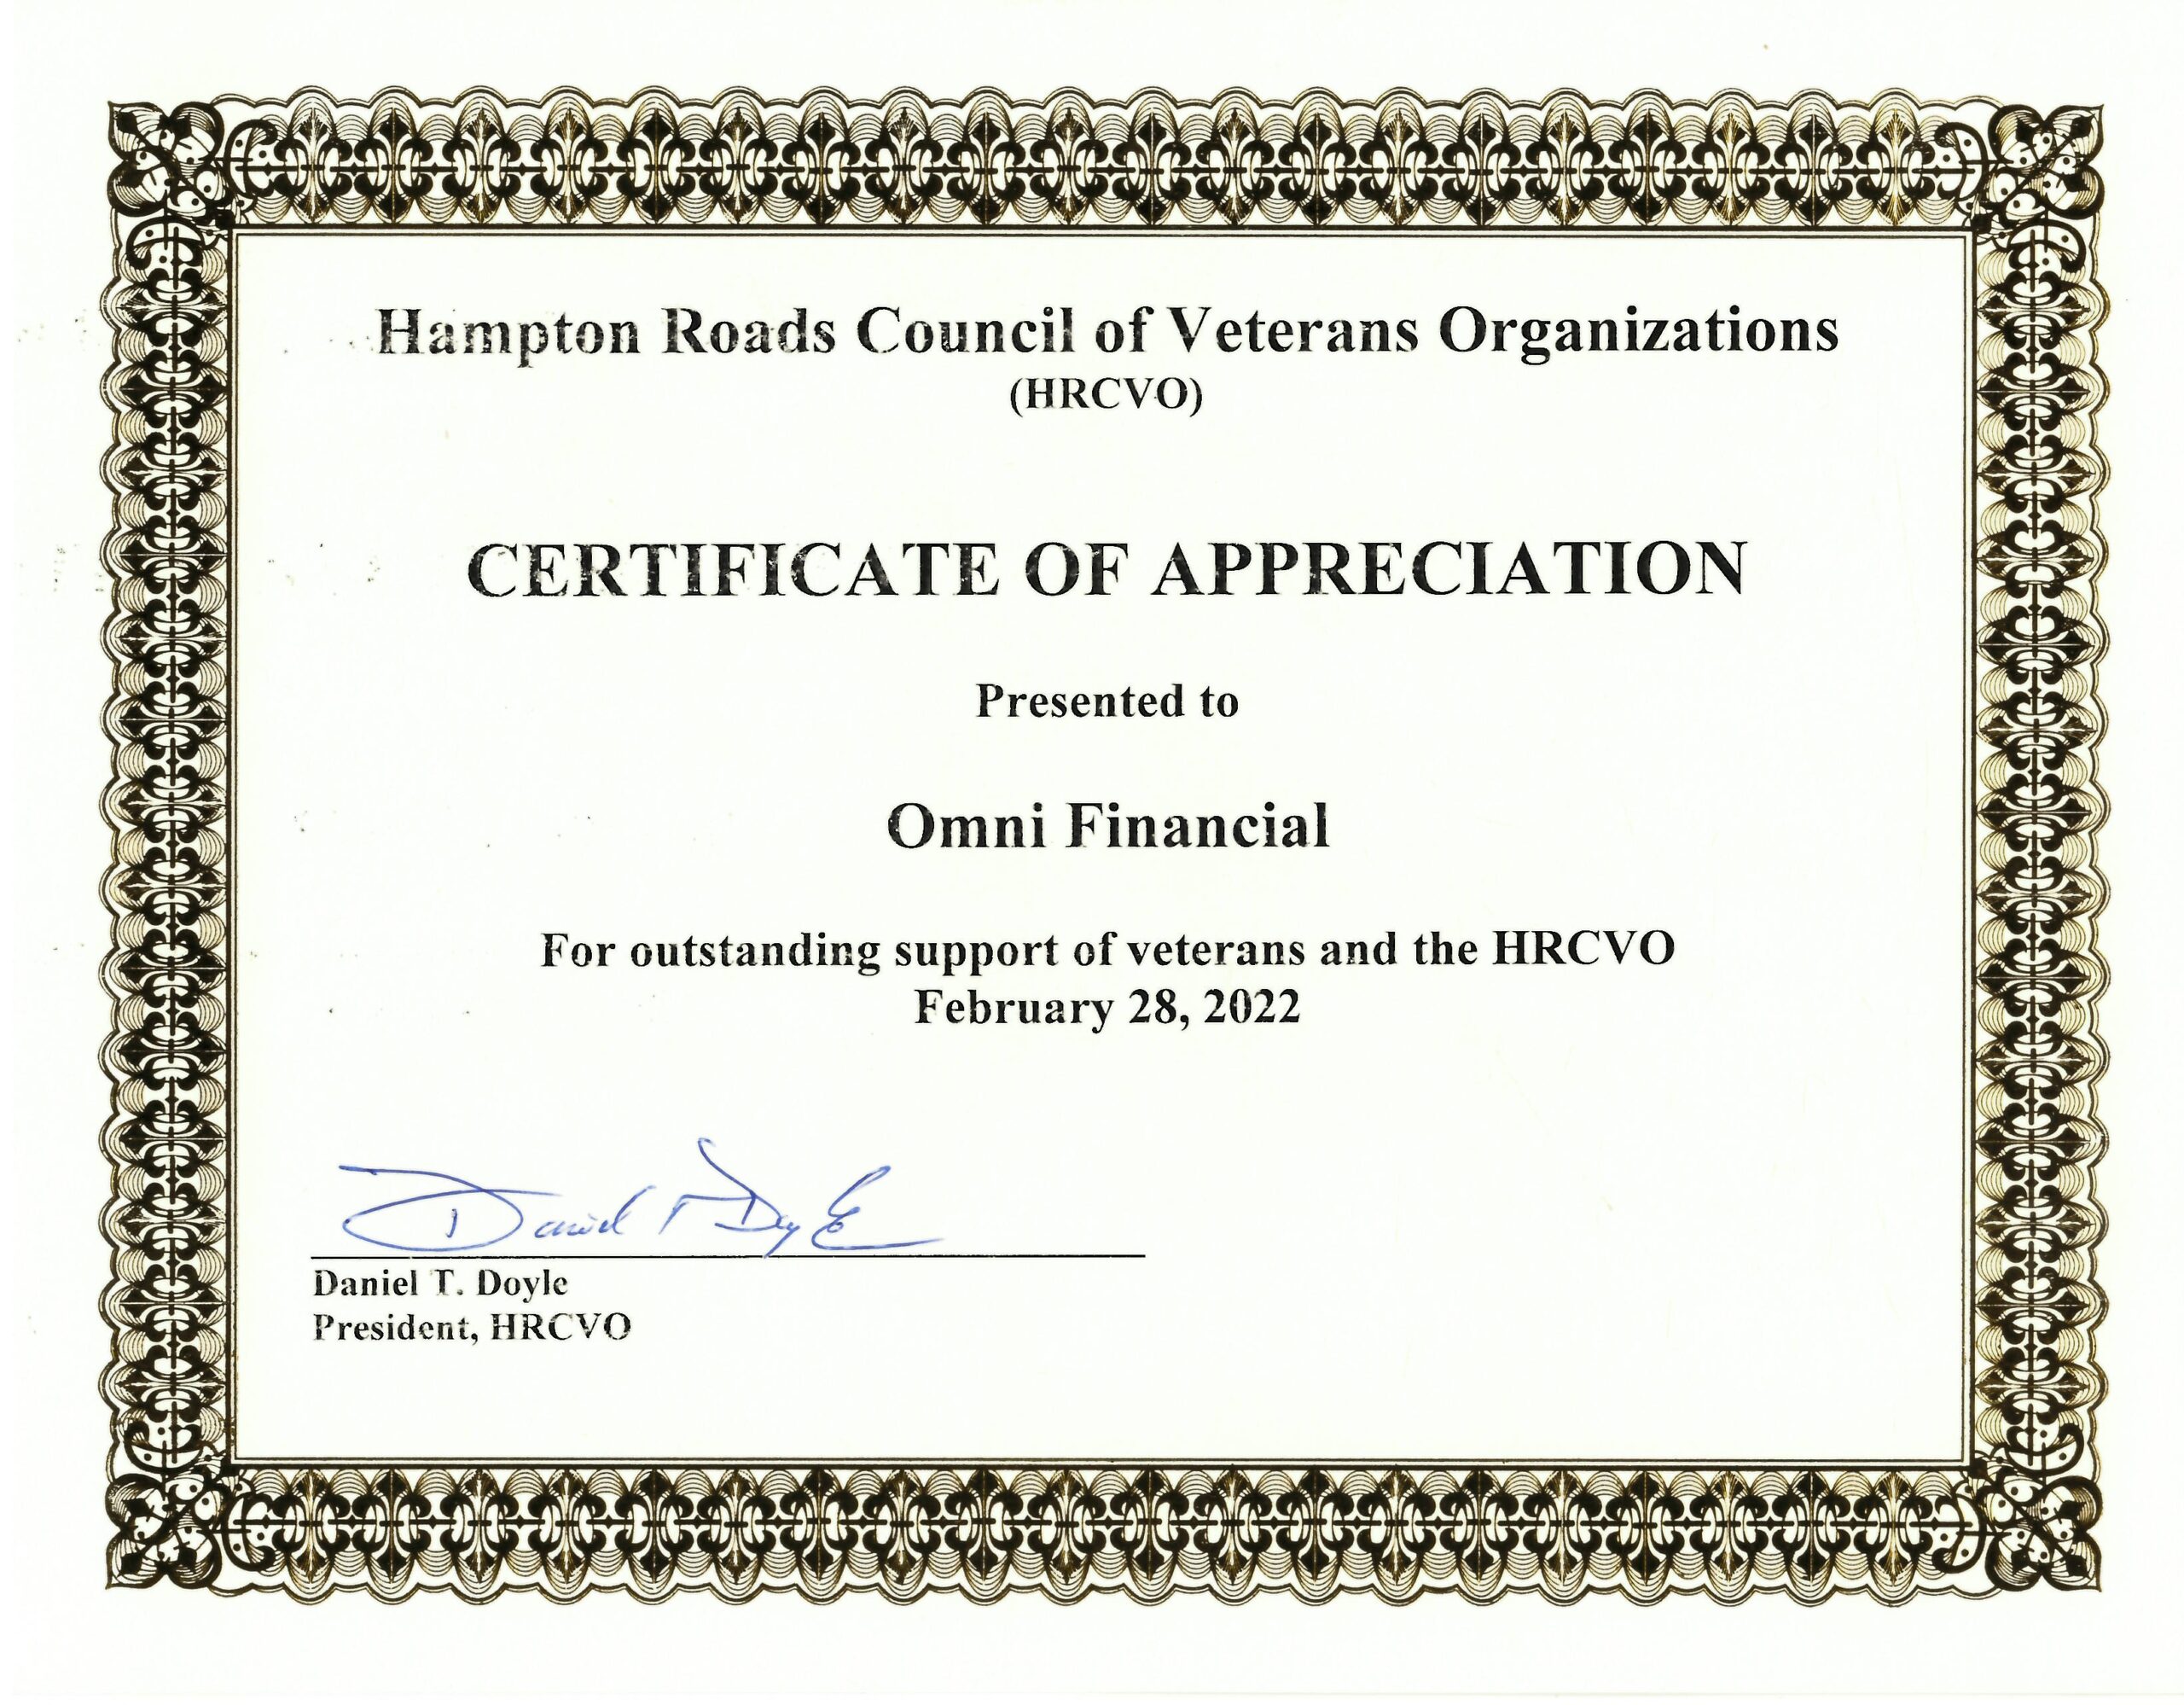 HRCVO Certificate of Appreciation